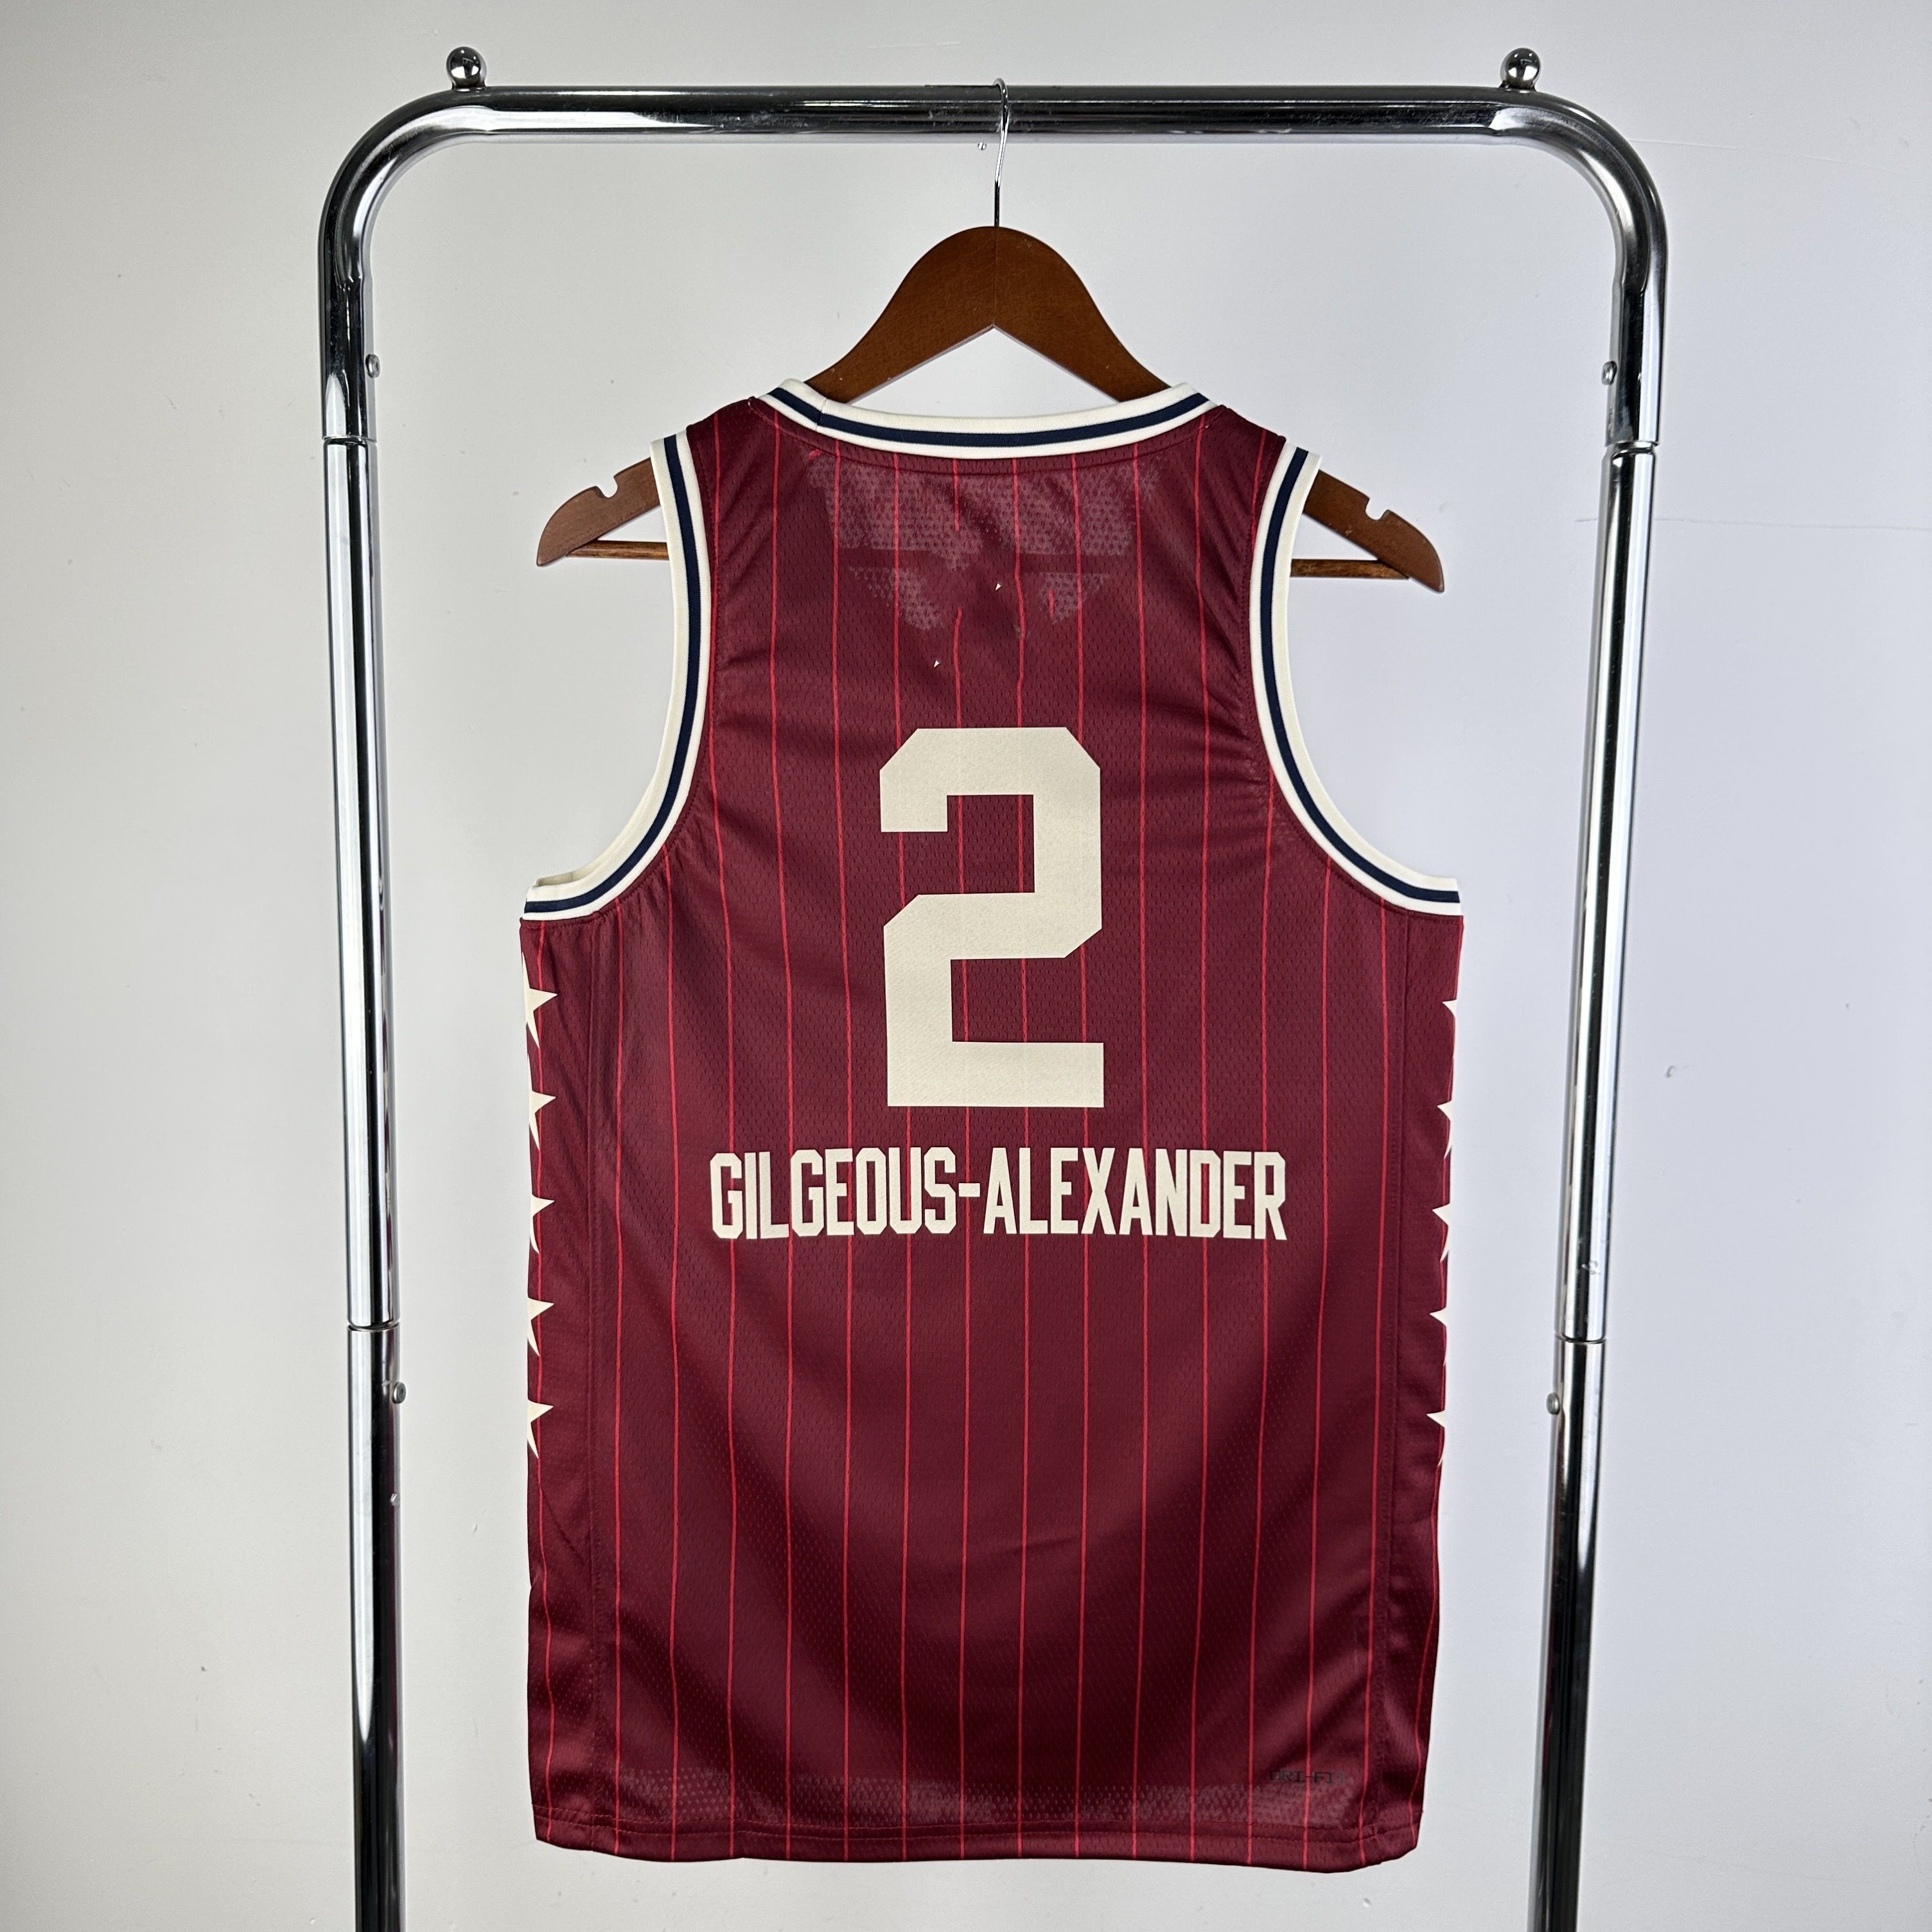 #2 Gilgeous-Alexander